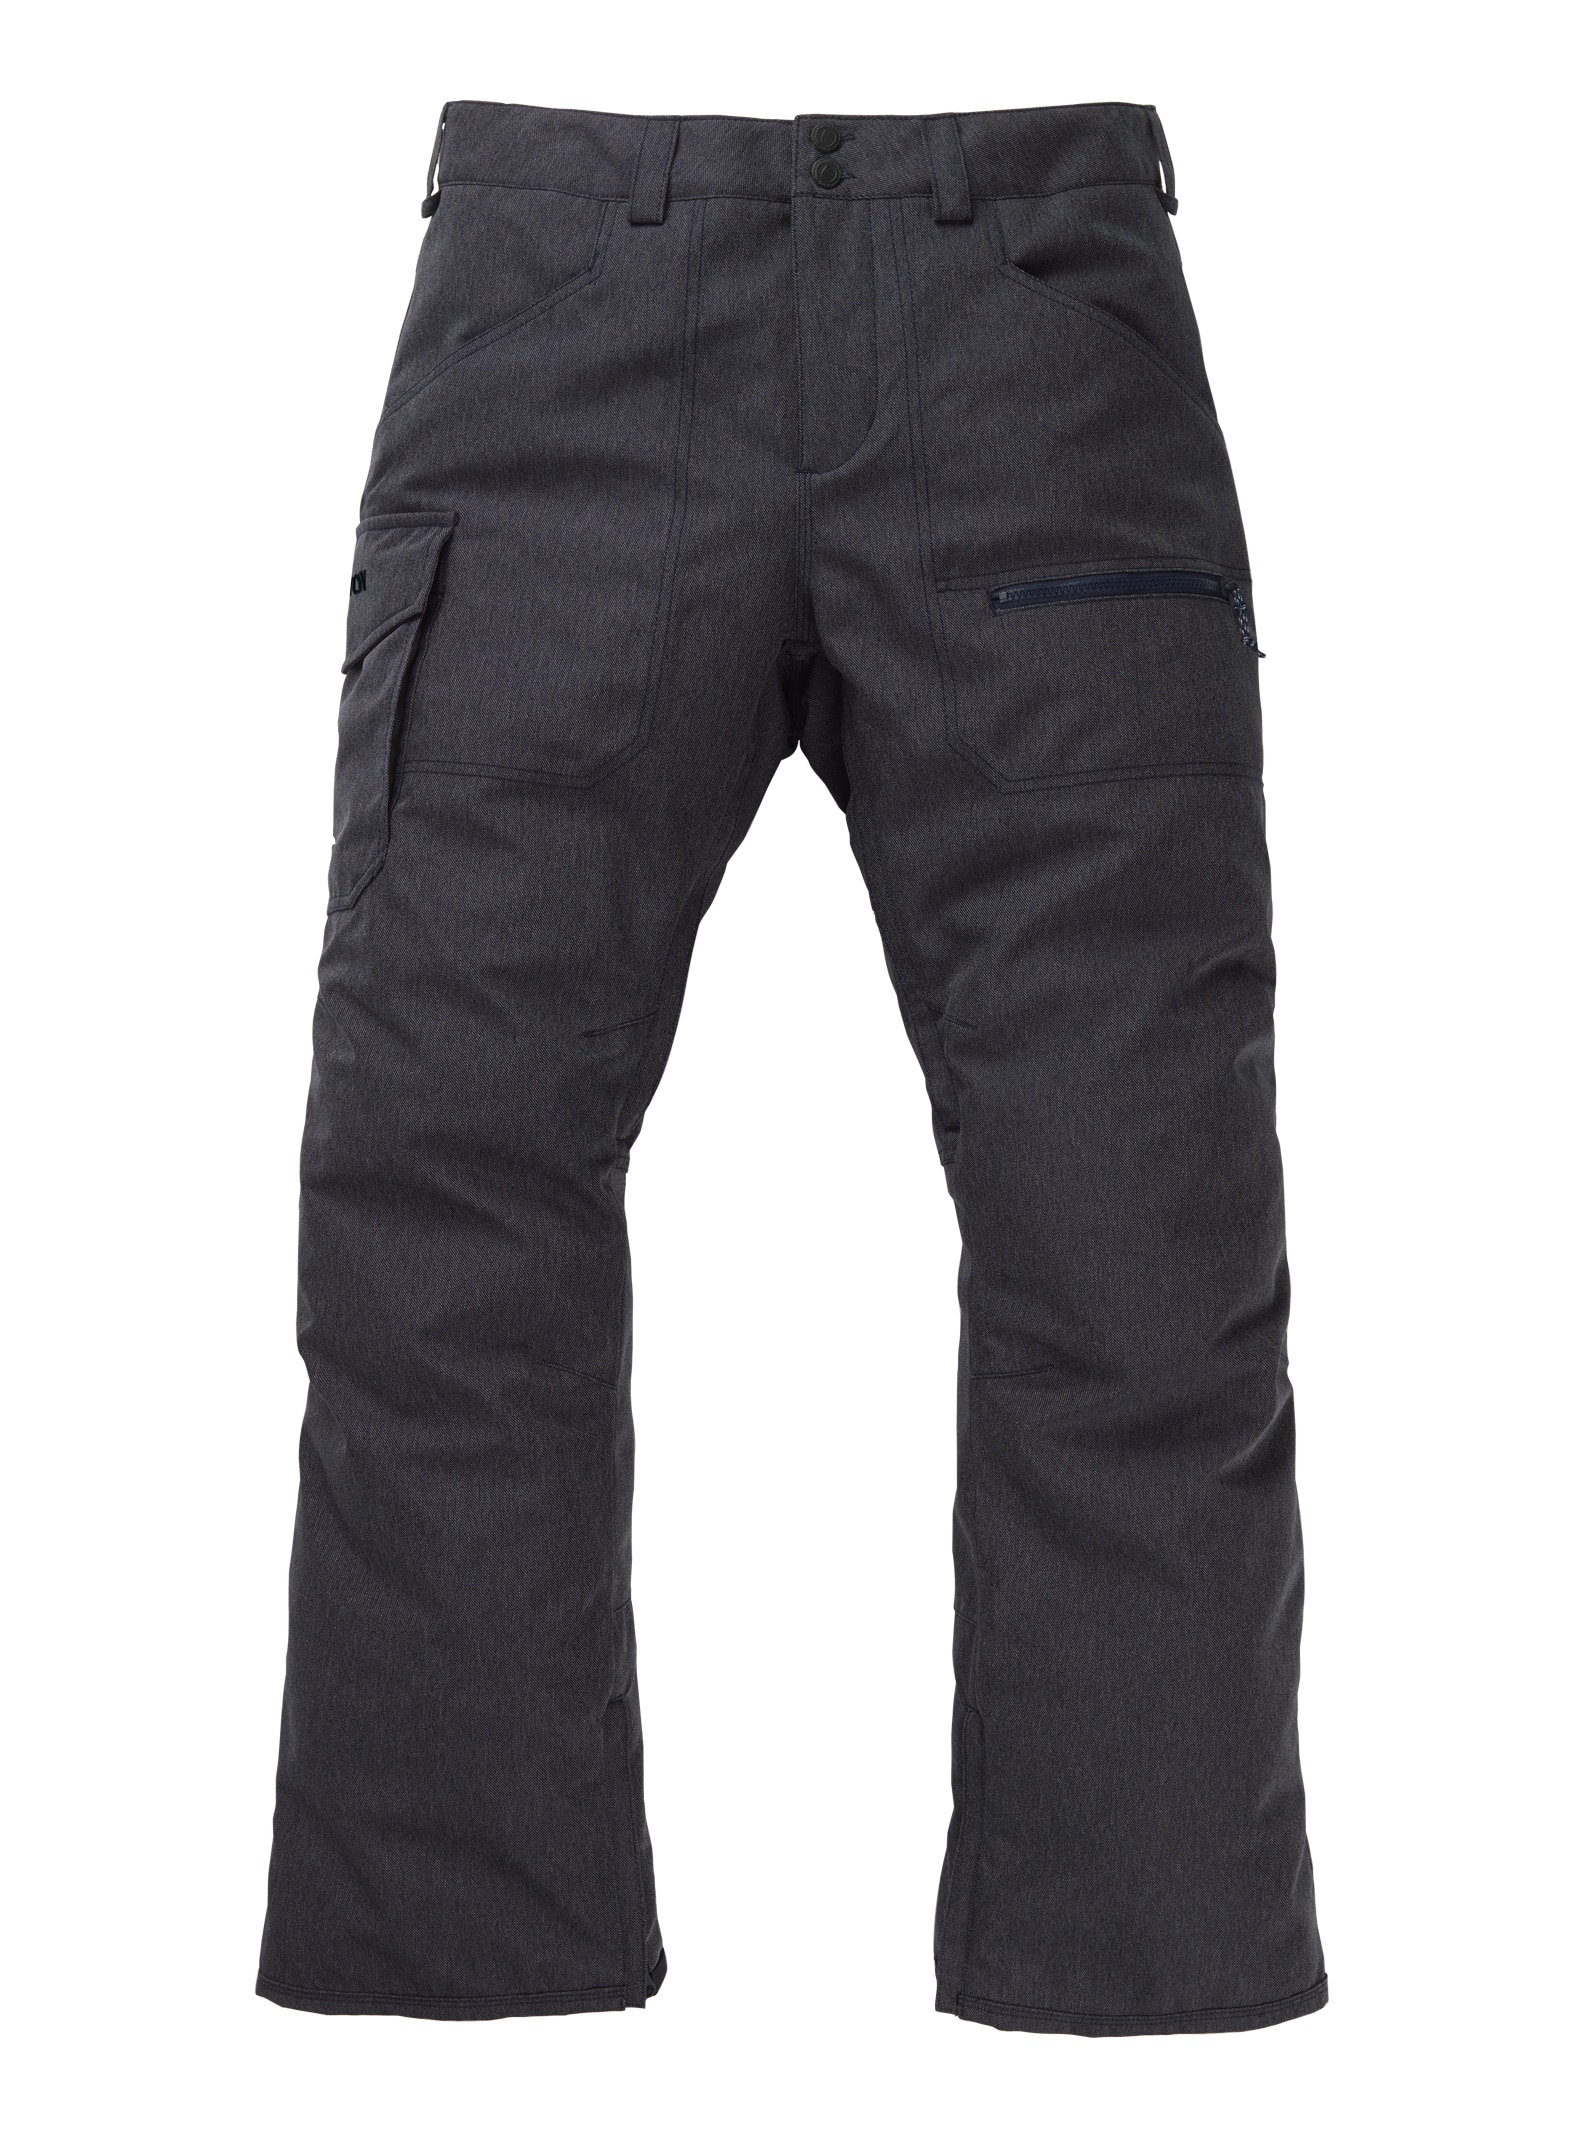 Burton Covert Insulated Snowboard Pants Mens 